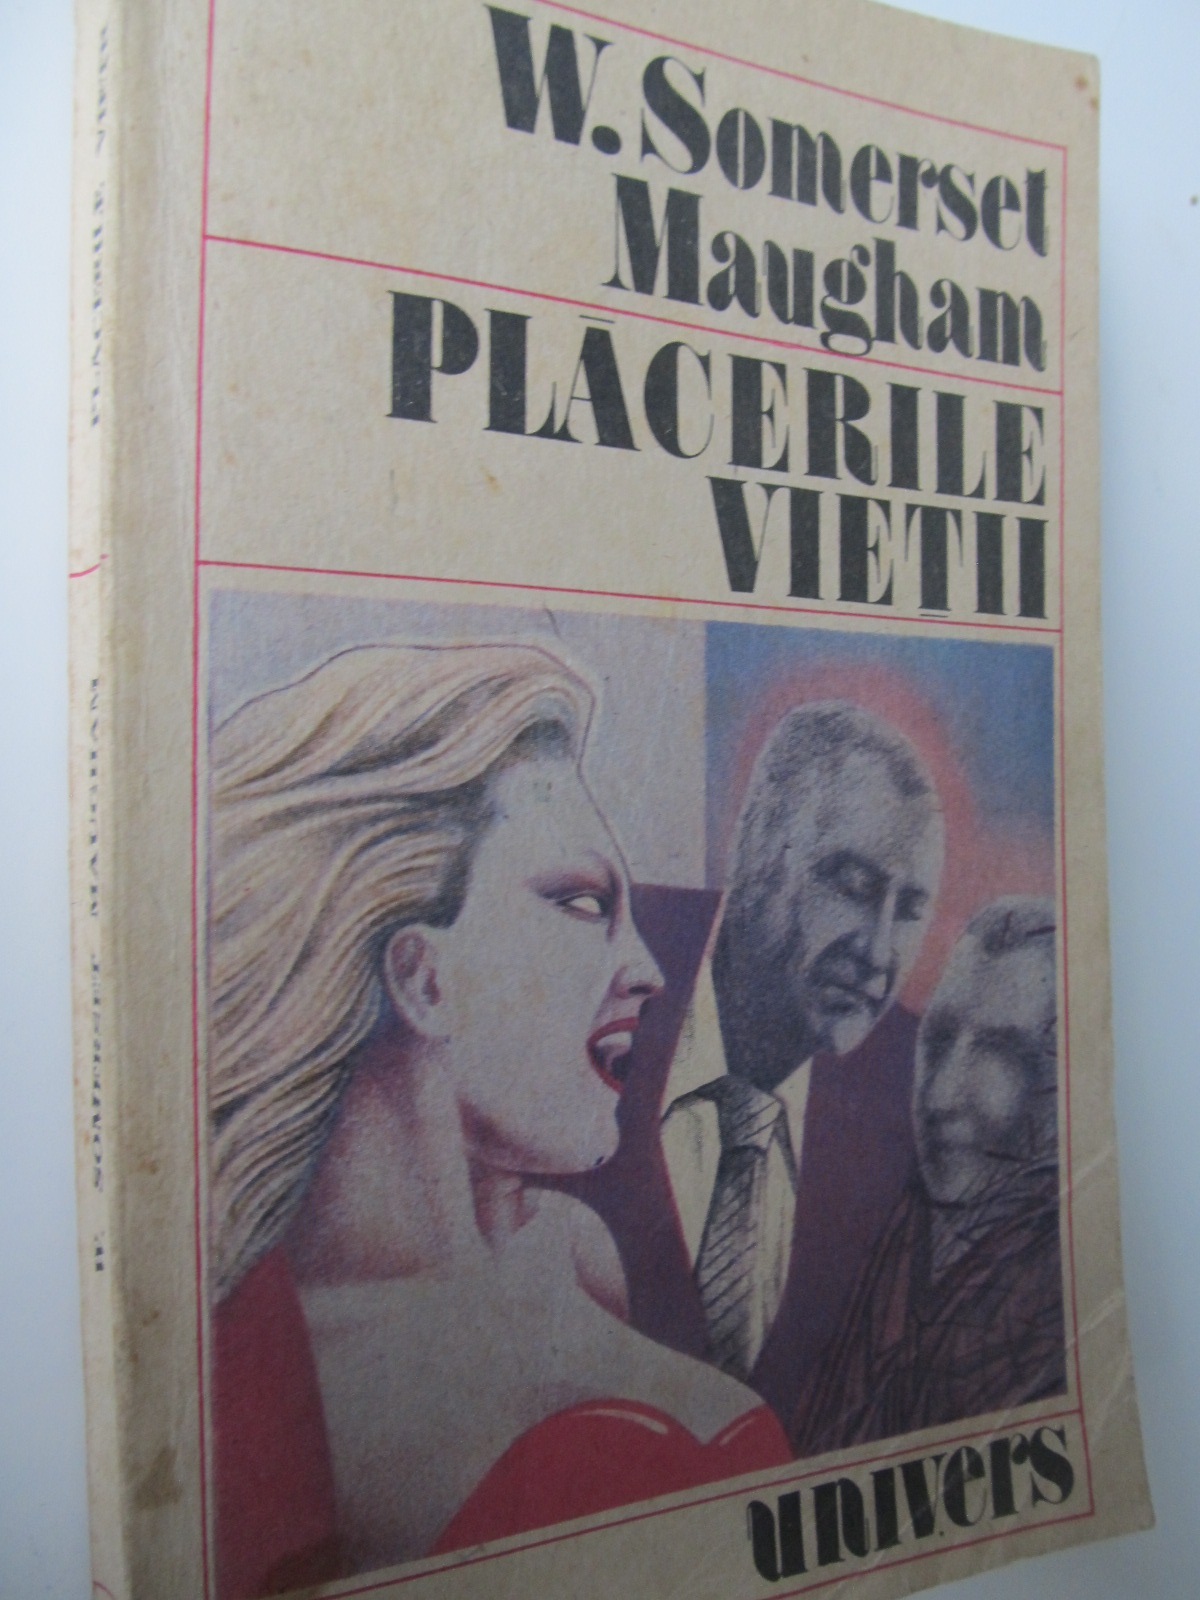 Placerile vietii - W. Somerset Maugham | Detalii carte